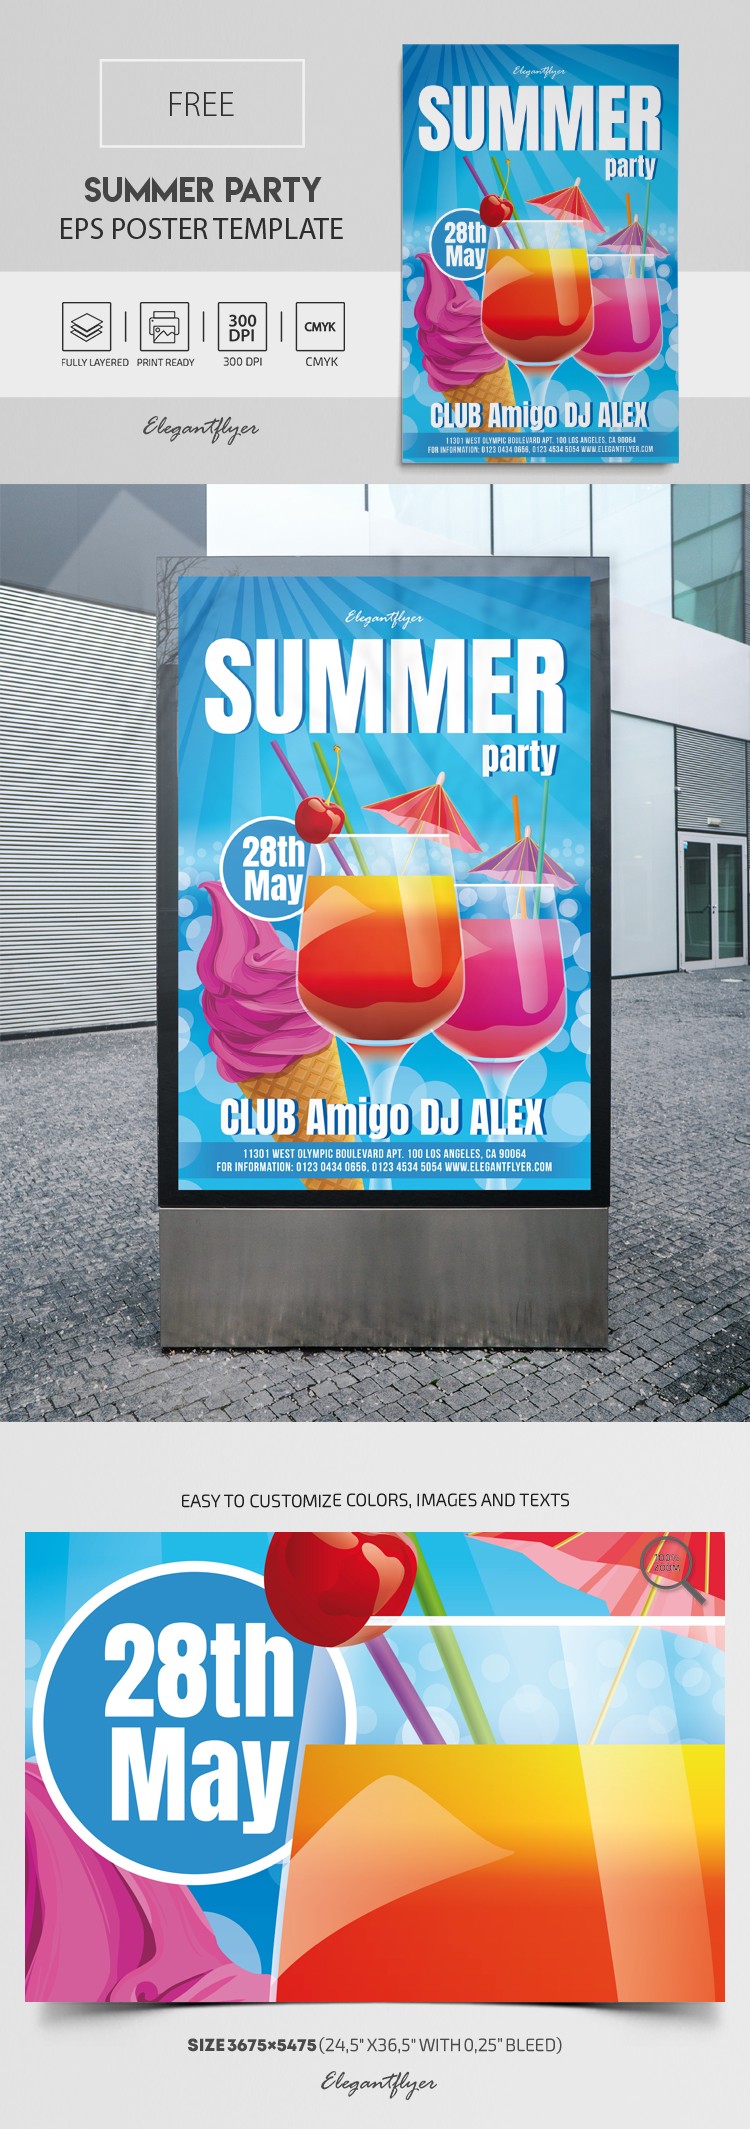 Sommerparty-Poster EPS by ElegantFlyer